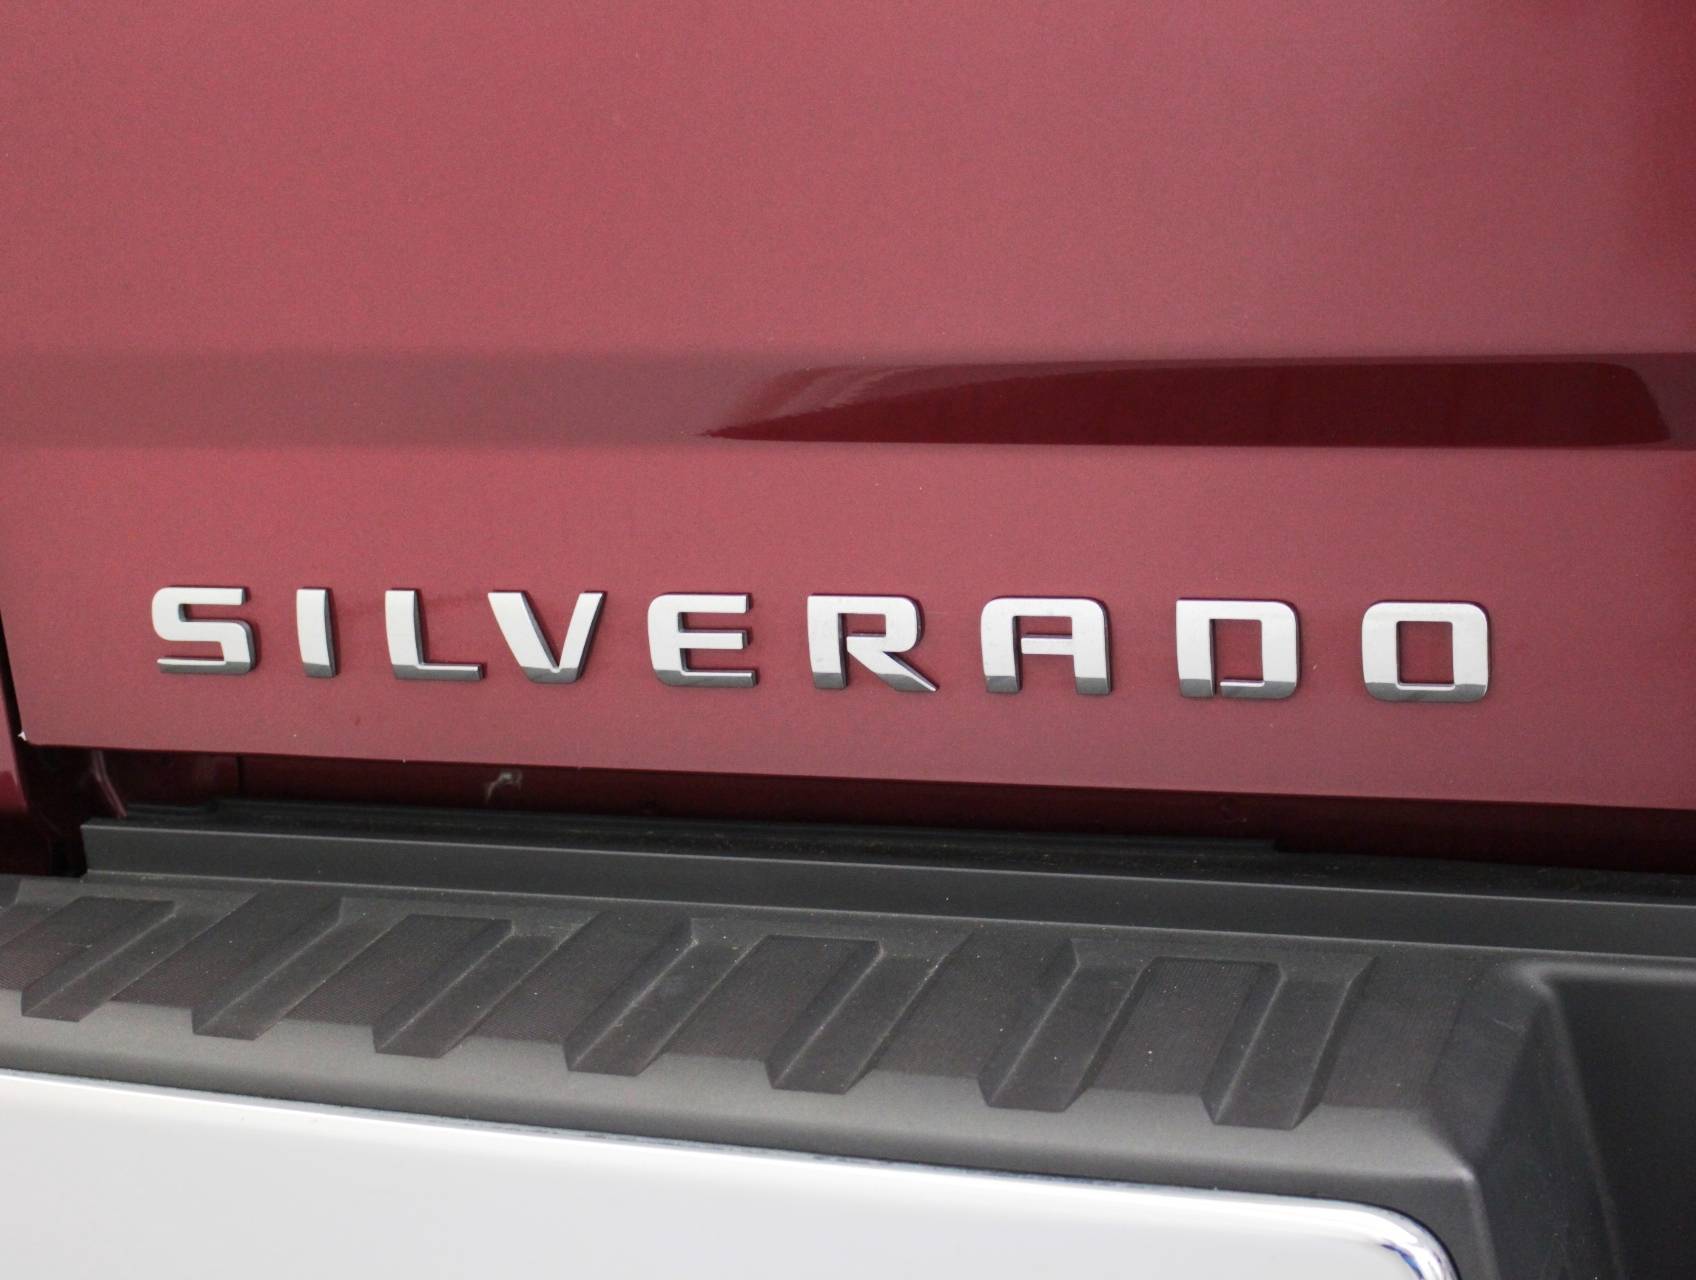 Florida Fine Cars - Used CHEVROLET SILVERADO 2015 MARGATE LT